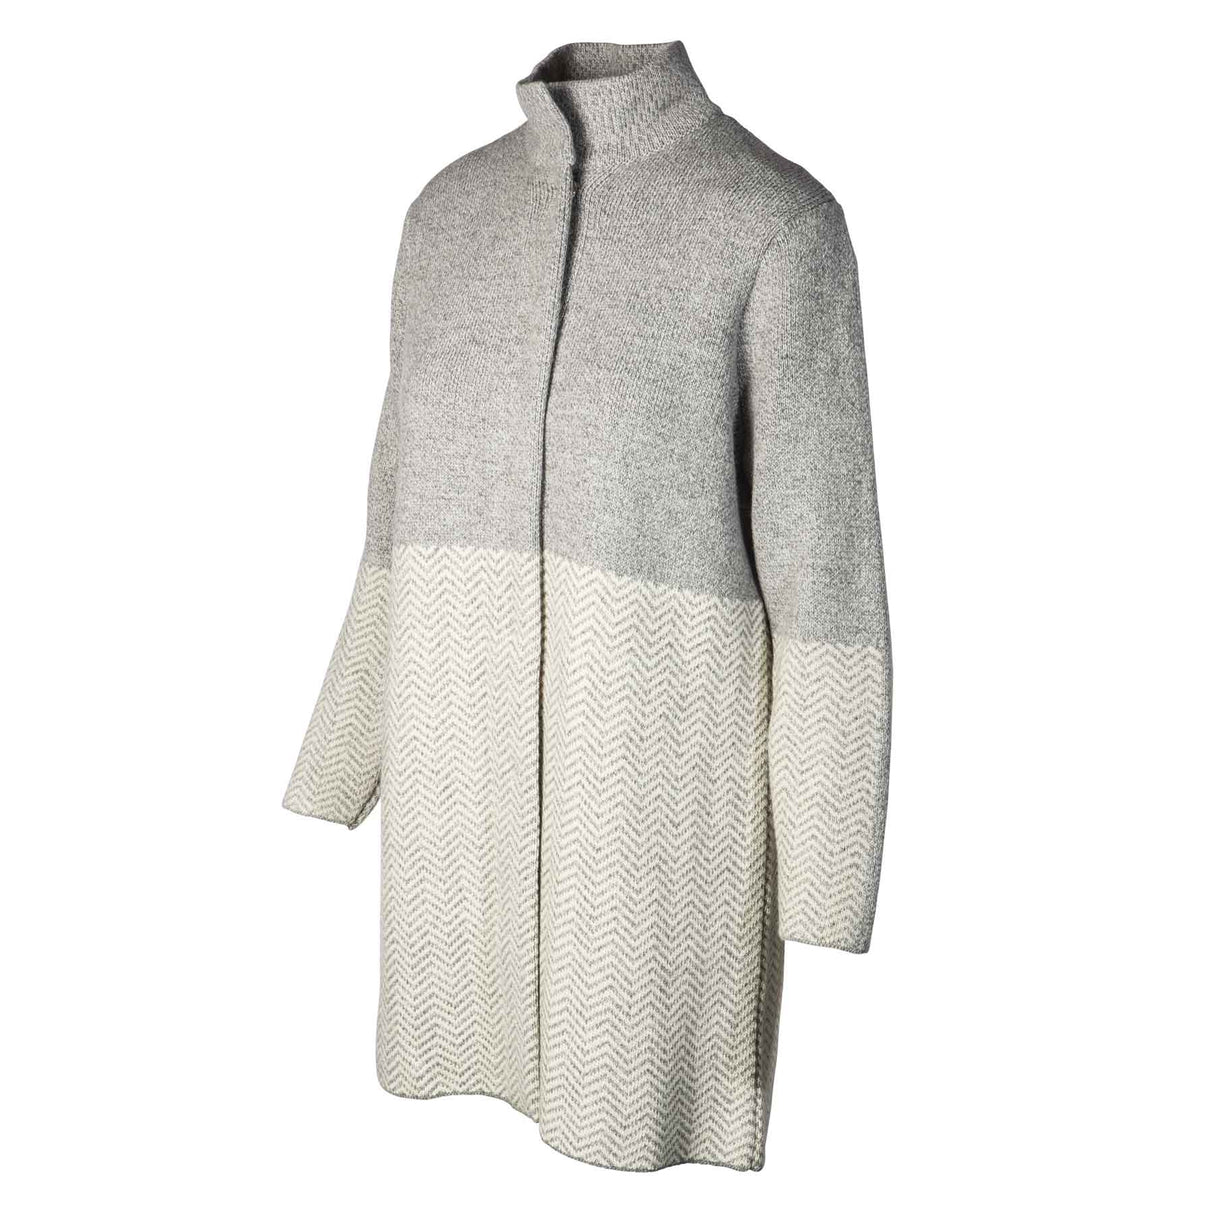 Herringbone Jacket, Grey - Creative Irish Gifts